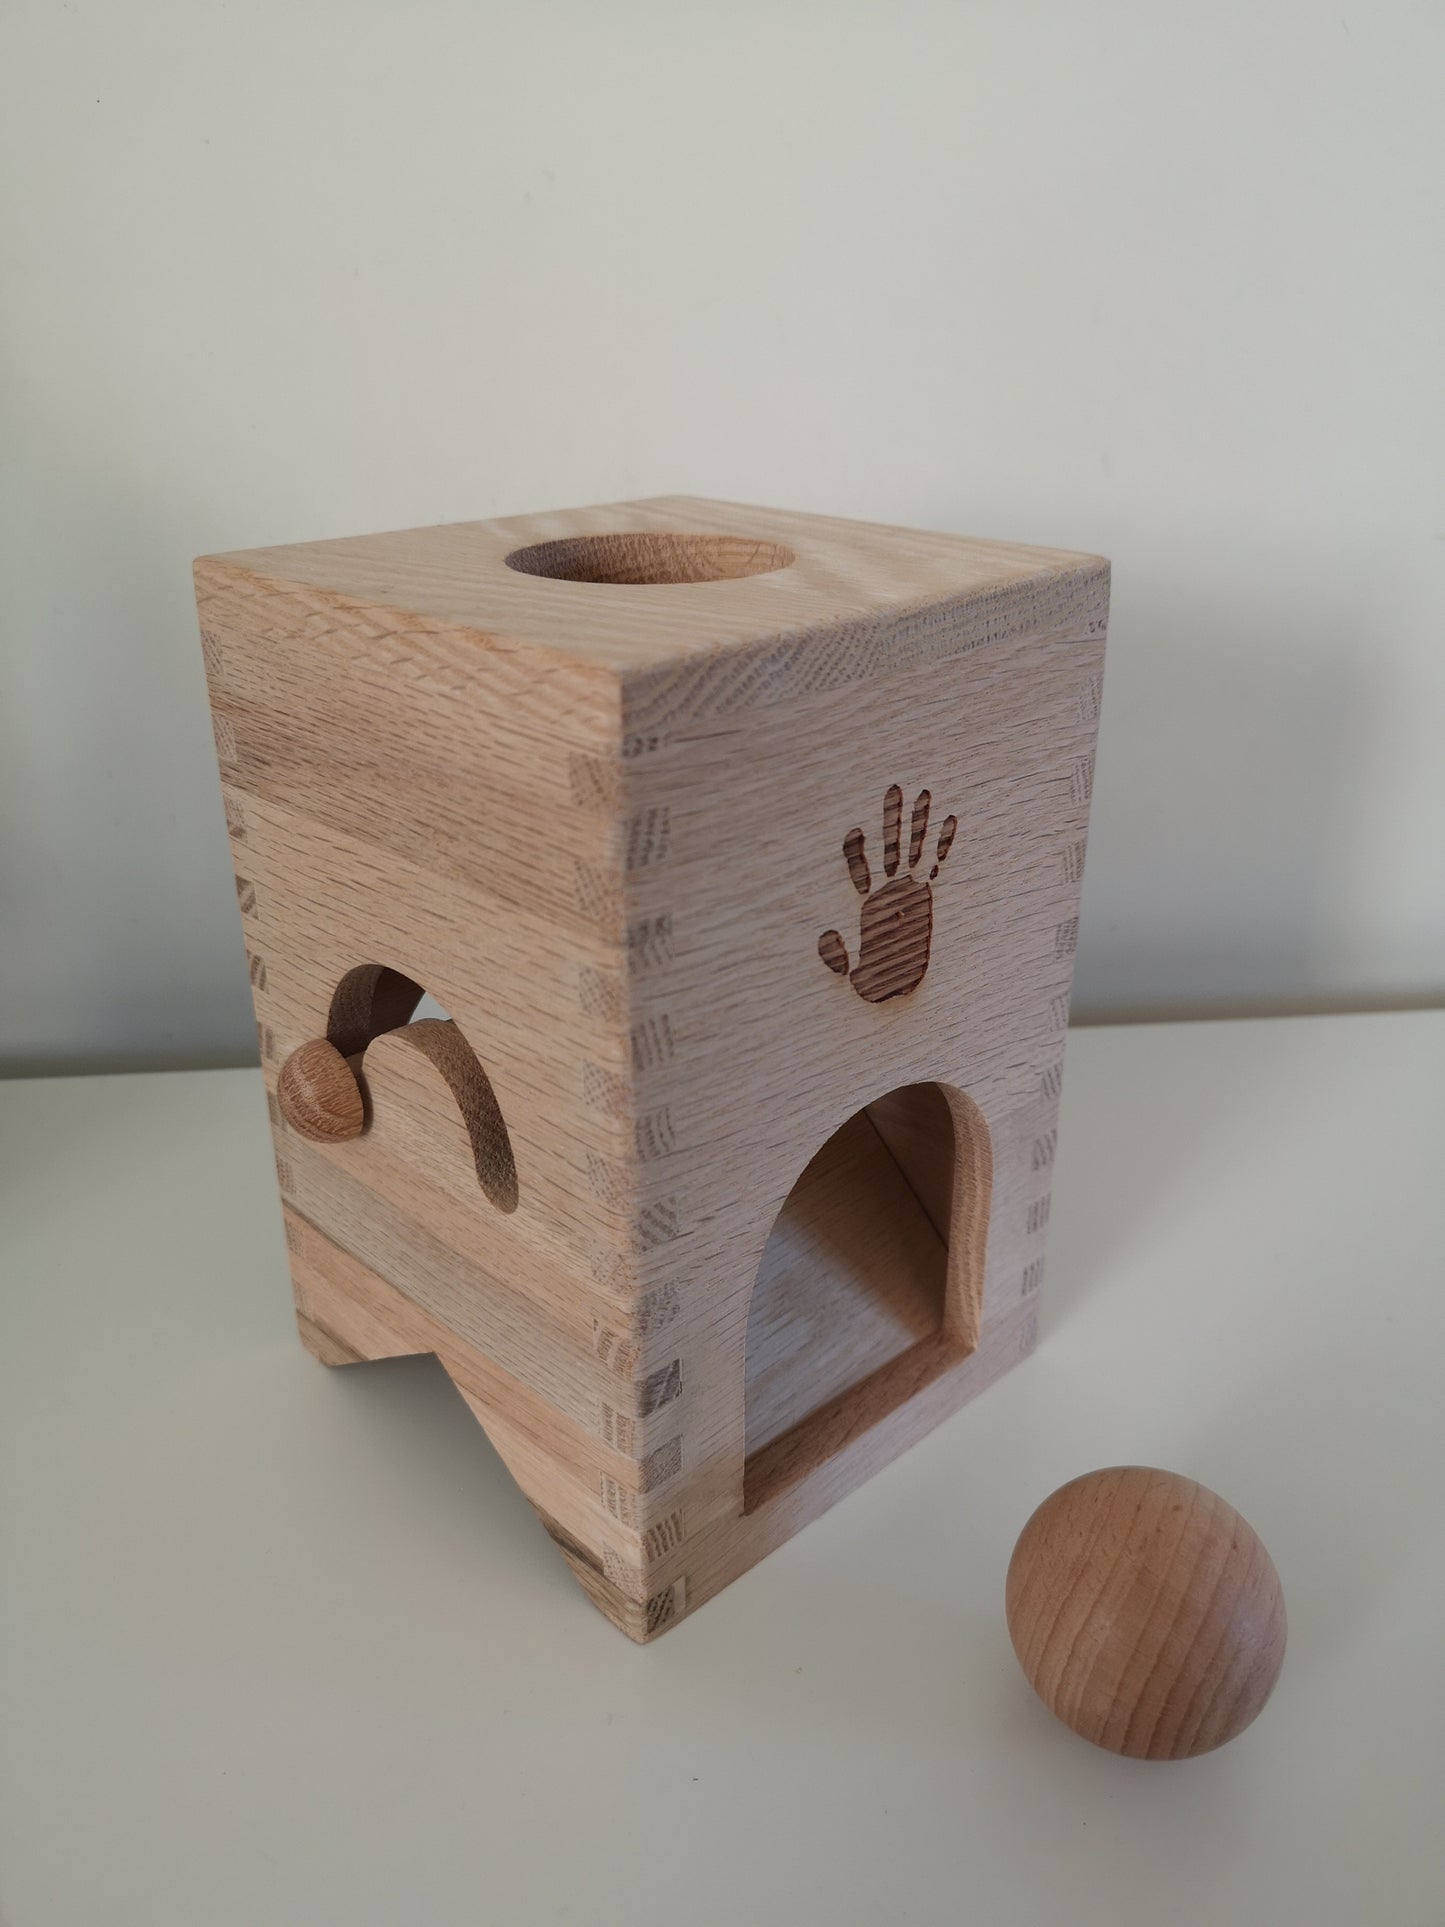 montessori object permanence box